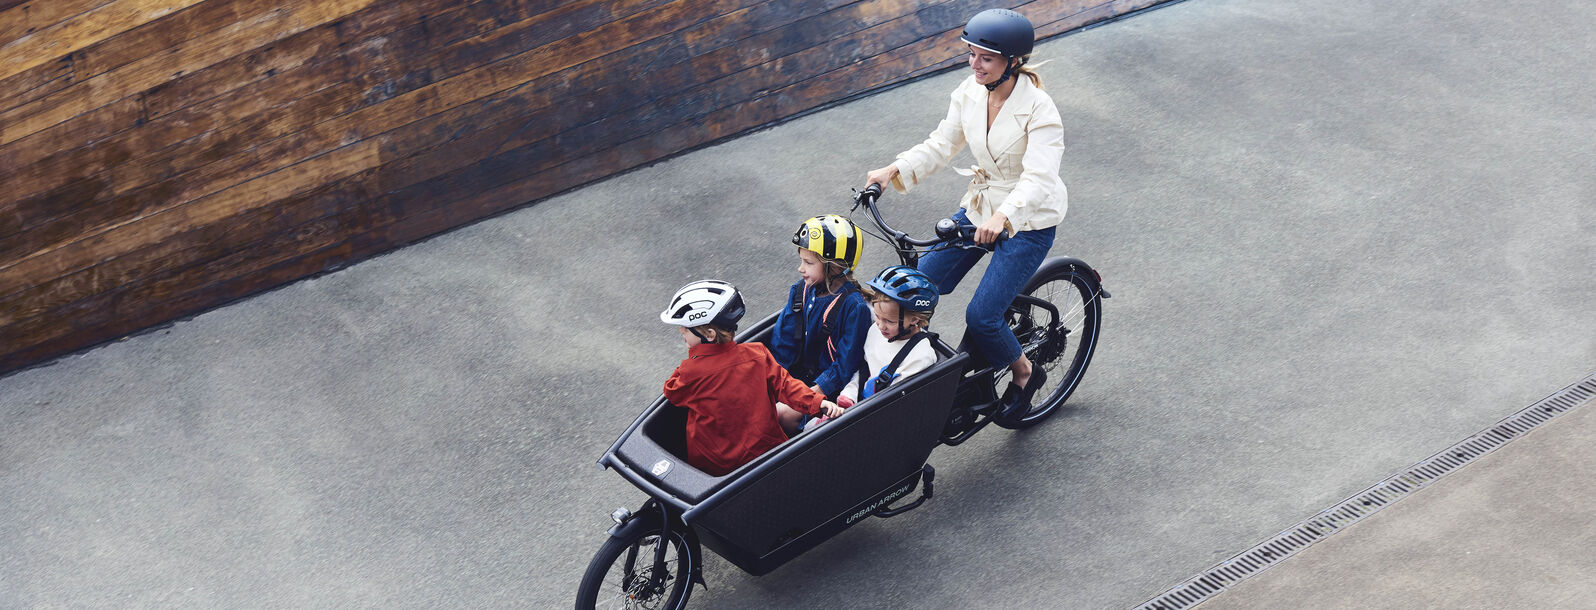 Auto vervangen, kinderen & cargo vervoeren: bakfiets, long-tail bike of fietskar?